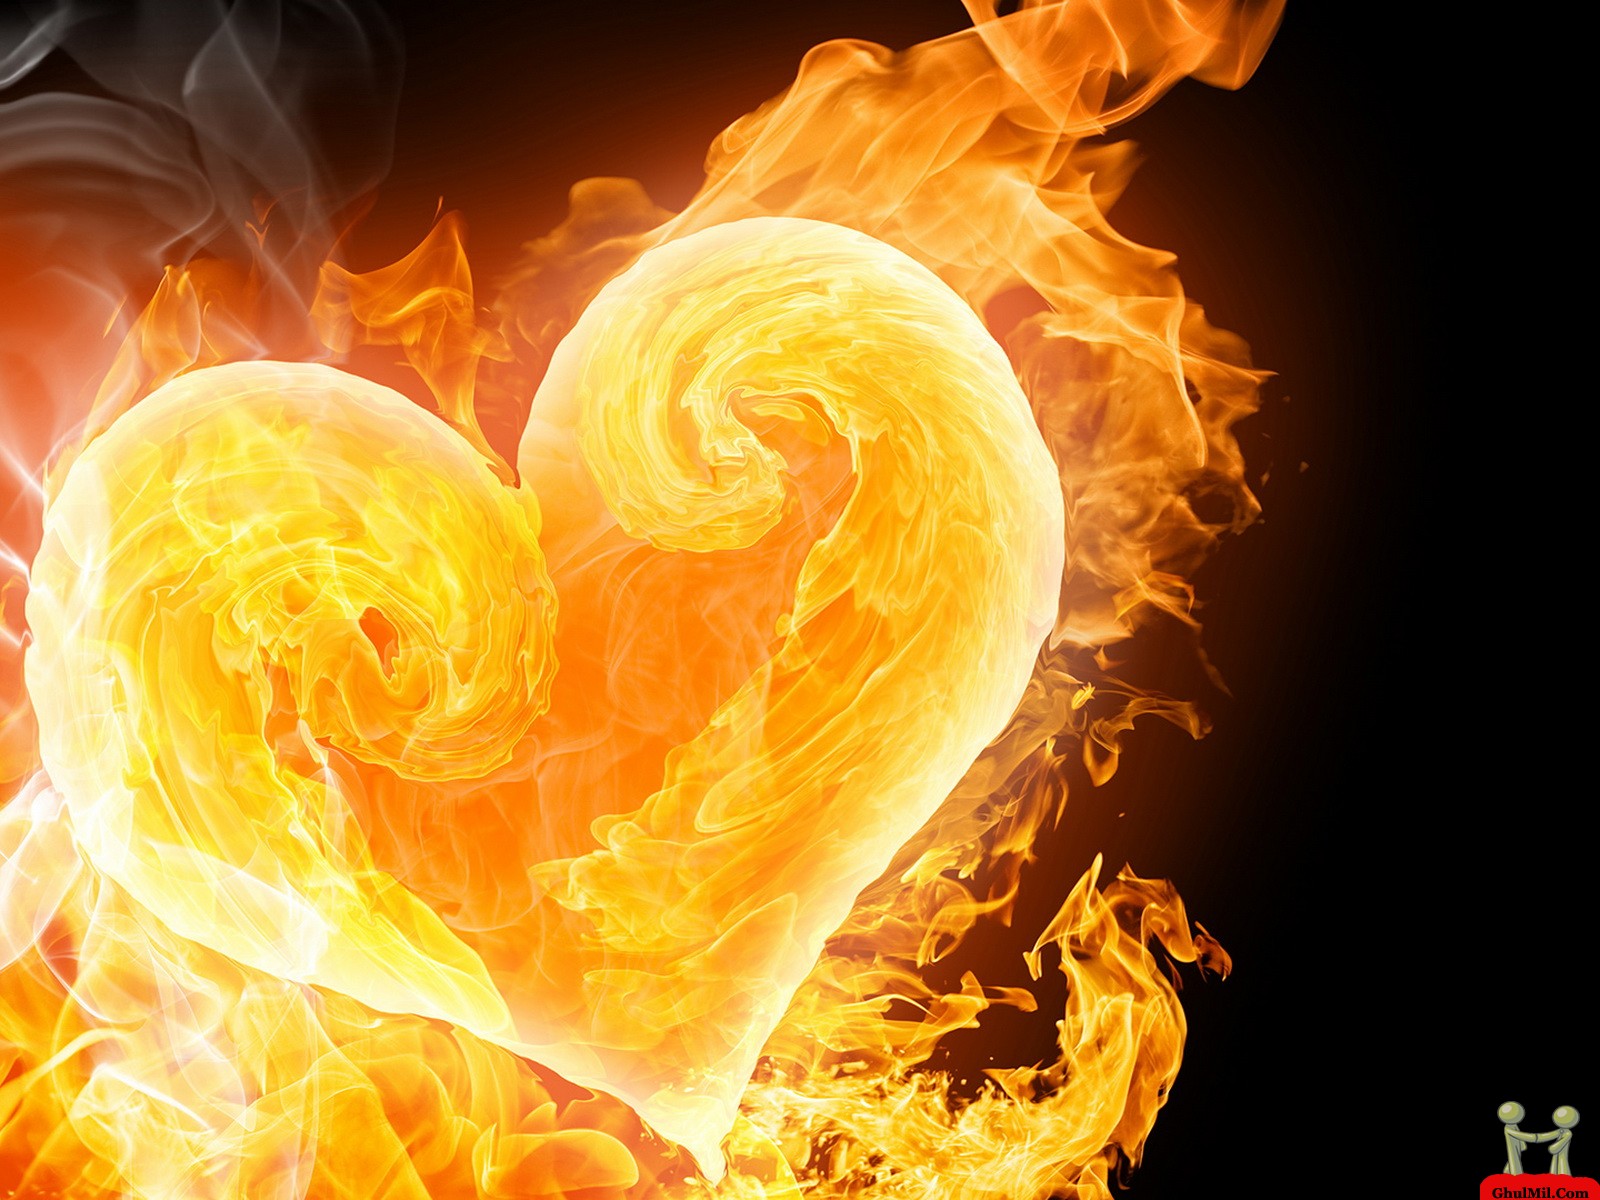 https://blogger.googleusercontent.com/img/b/R29vZ2xl/AVvXsEifh9fpxGpHlqp9fD-Gi0L96AjSpzt1qg7vYoWbAxE4FJlnHeF38dfLhhGBPRtJxPiLzLM9zKW73kSrN813H0hQCDShsnySzg7hkIDyJZq9IYoKMUNOO7lZoenQVJq2GNUoLIcaxVPN3dEq/s1600/beautiful-3d-fire-burning-love-heart-hd-wallpaper.jpg